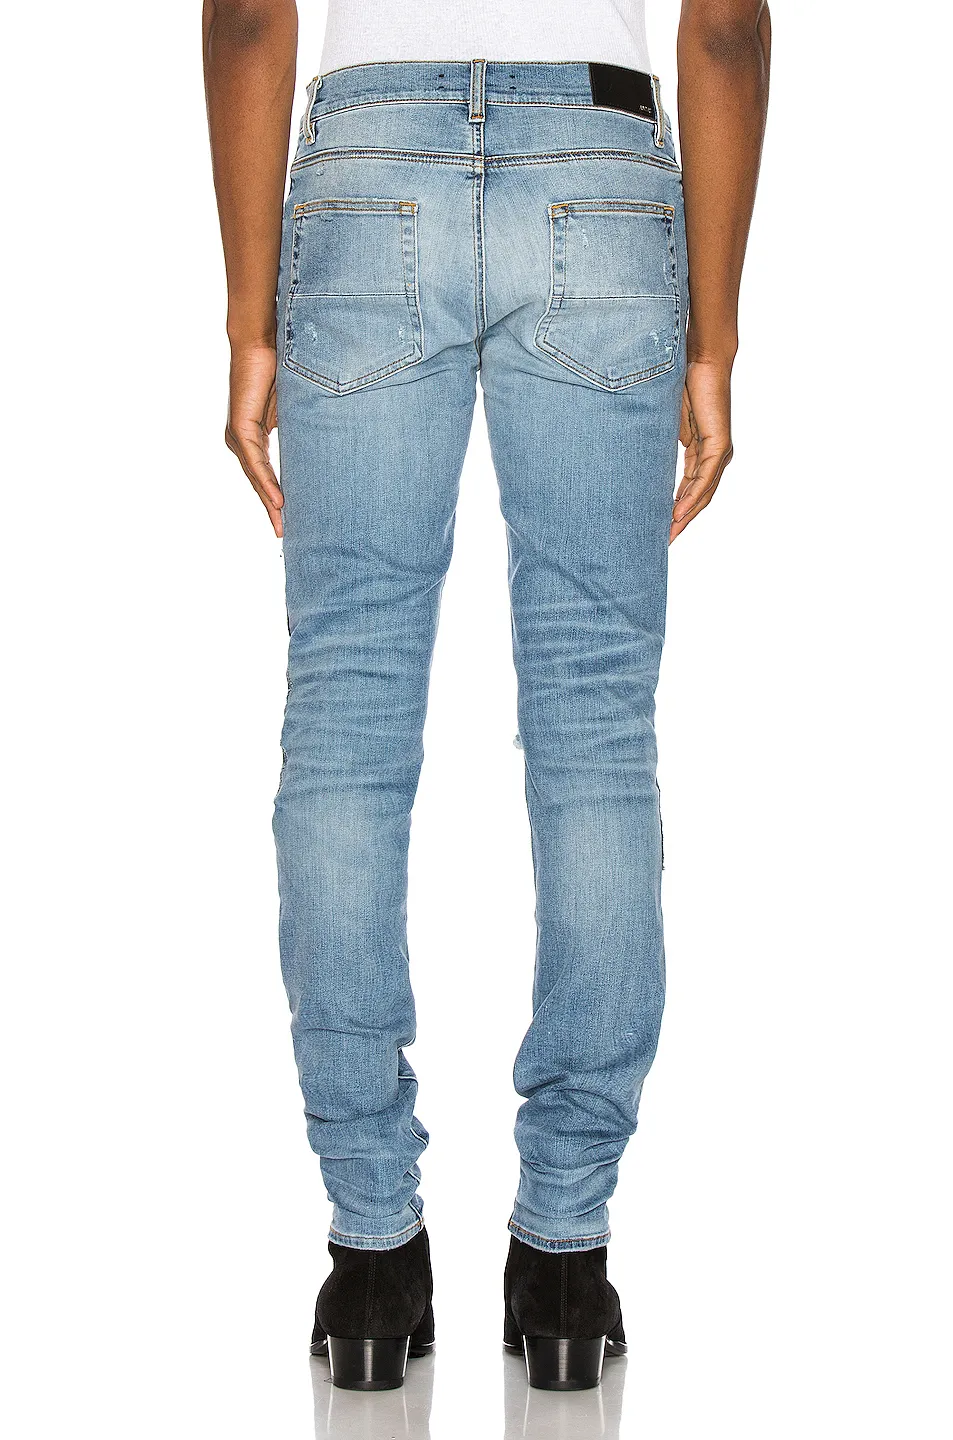 Mode Männer Lange Hosen Desiger Hohe Qualität Patchworl Ripped Loch Demin Hosen Streetwear Jeans für Männer270L